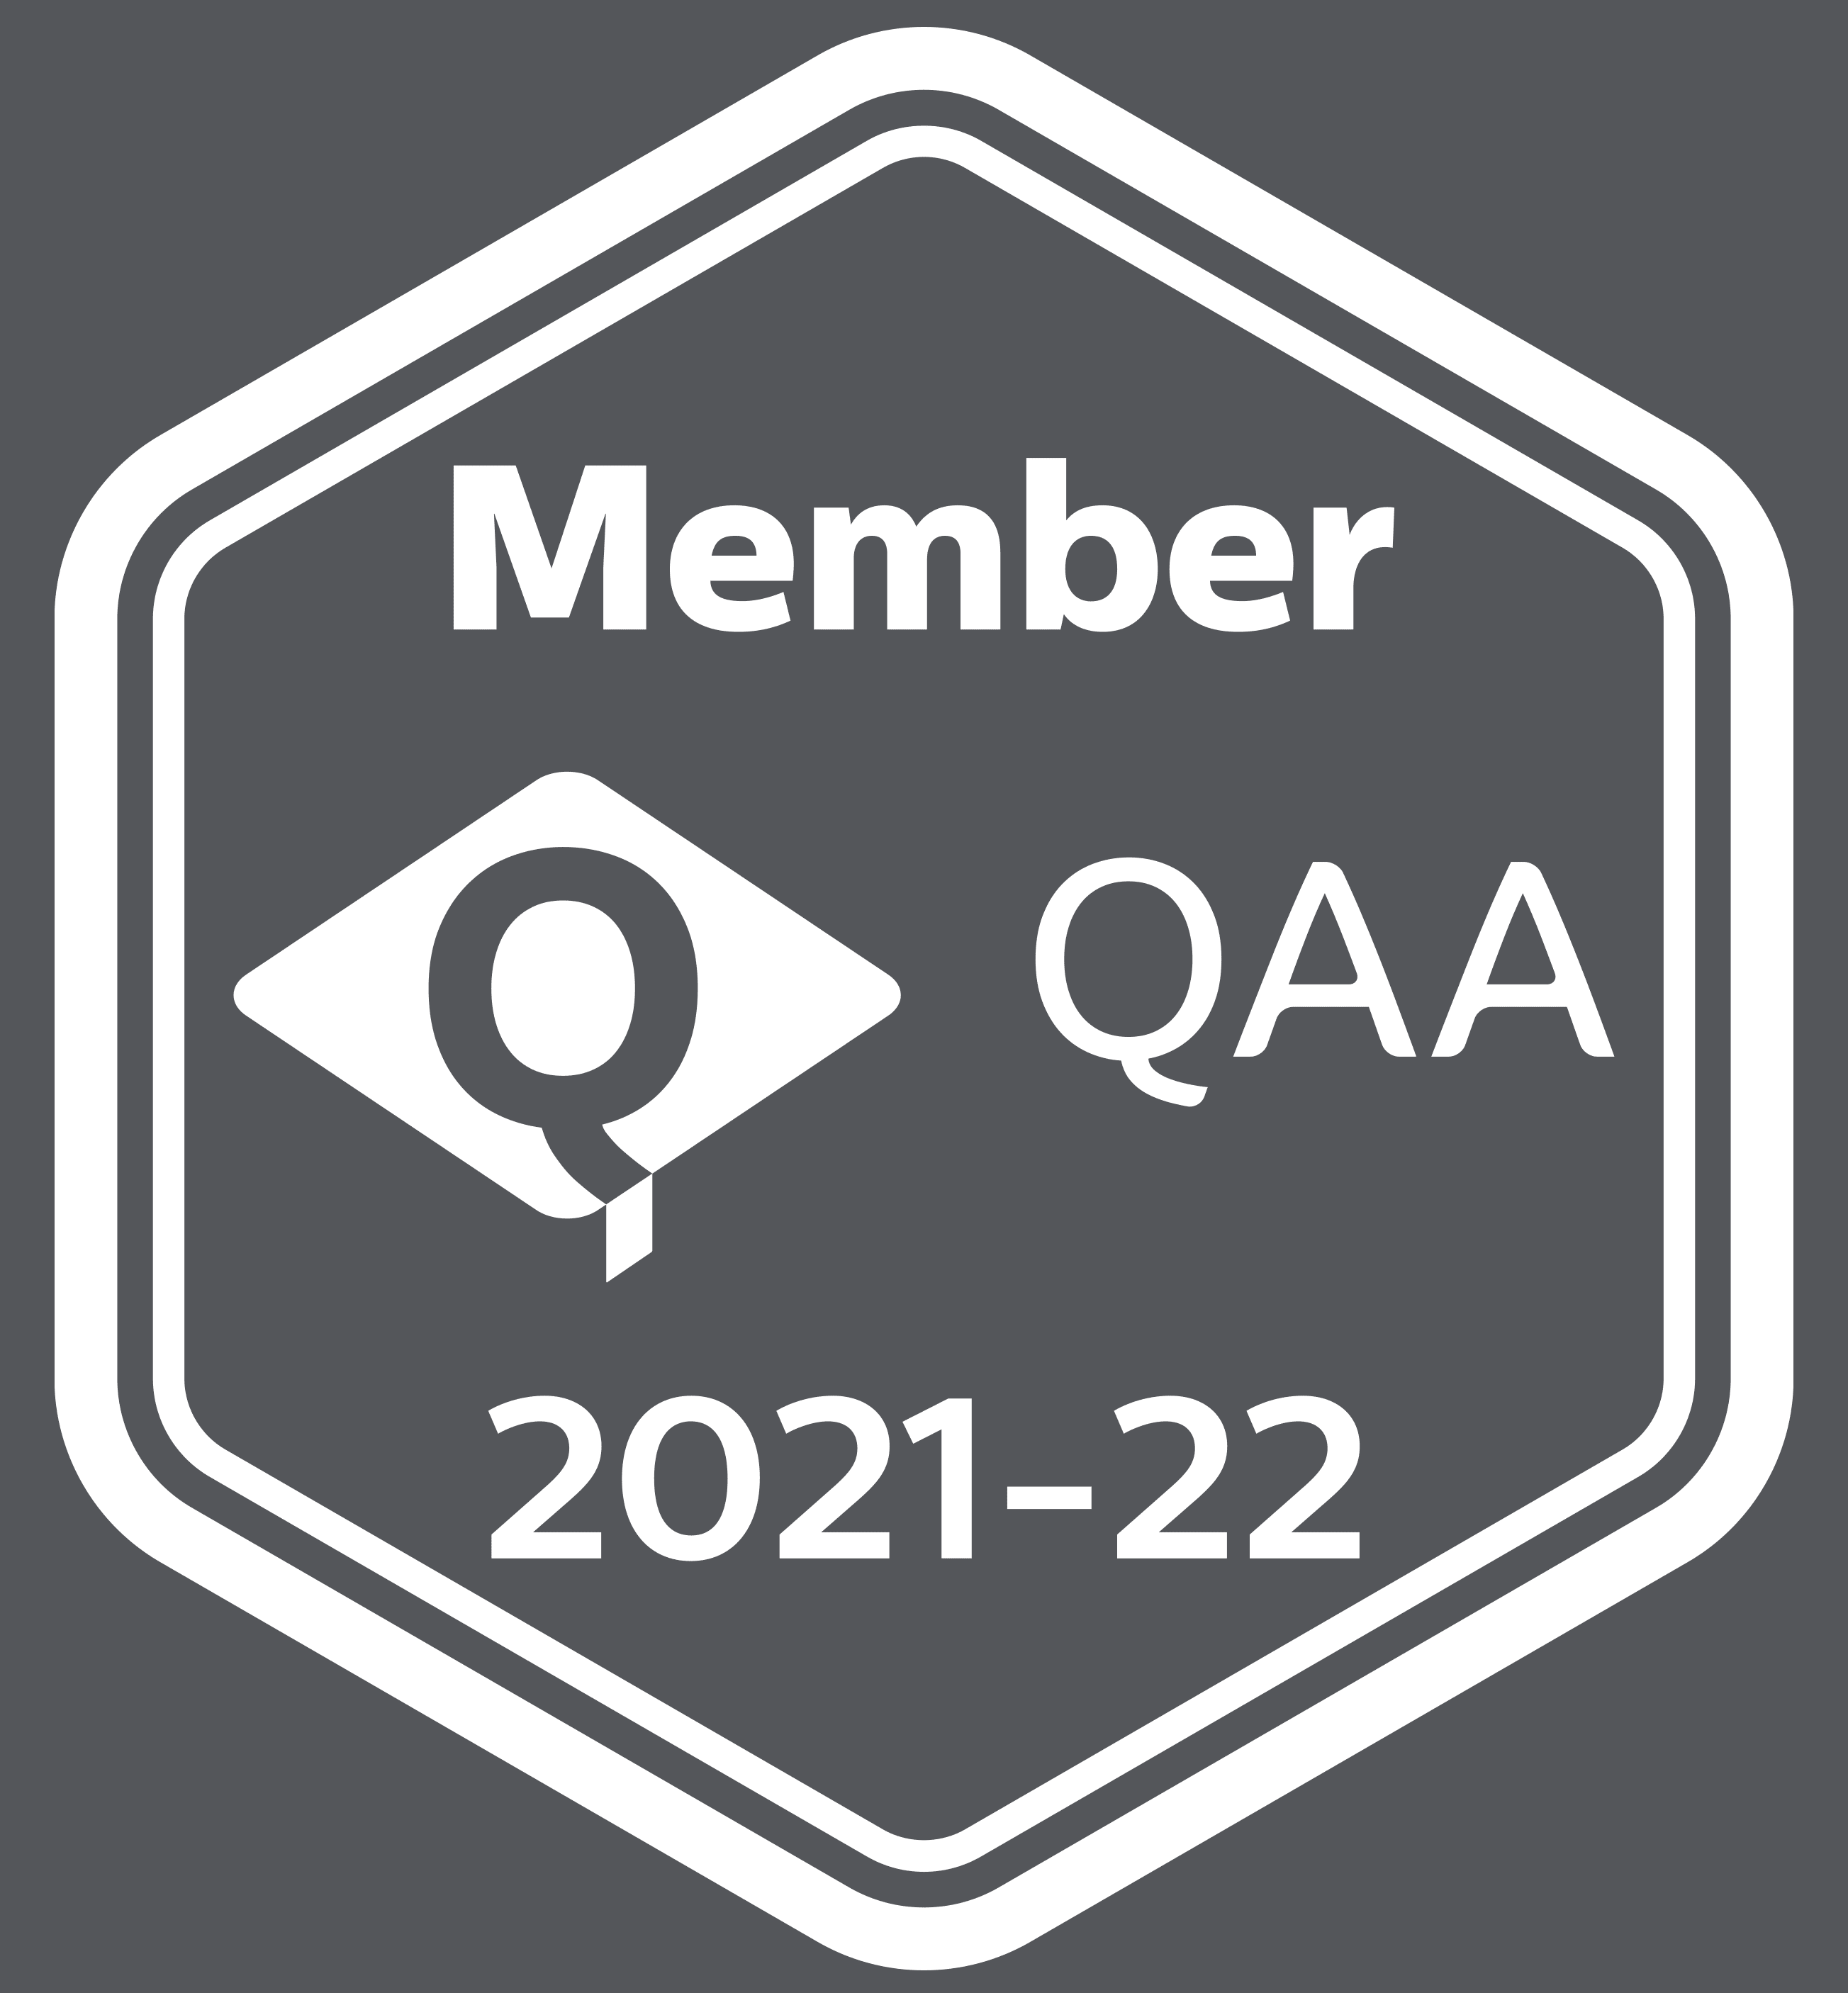 A logo of the membership of QAA 